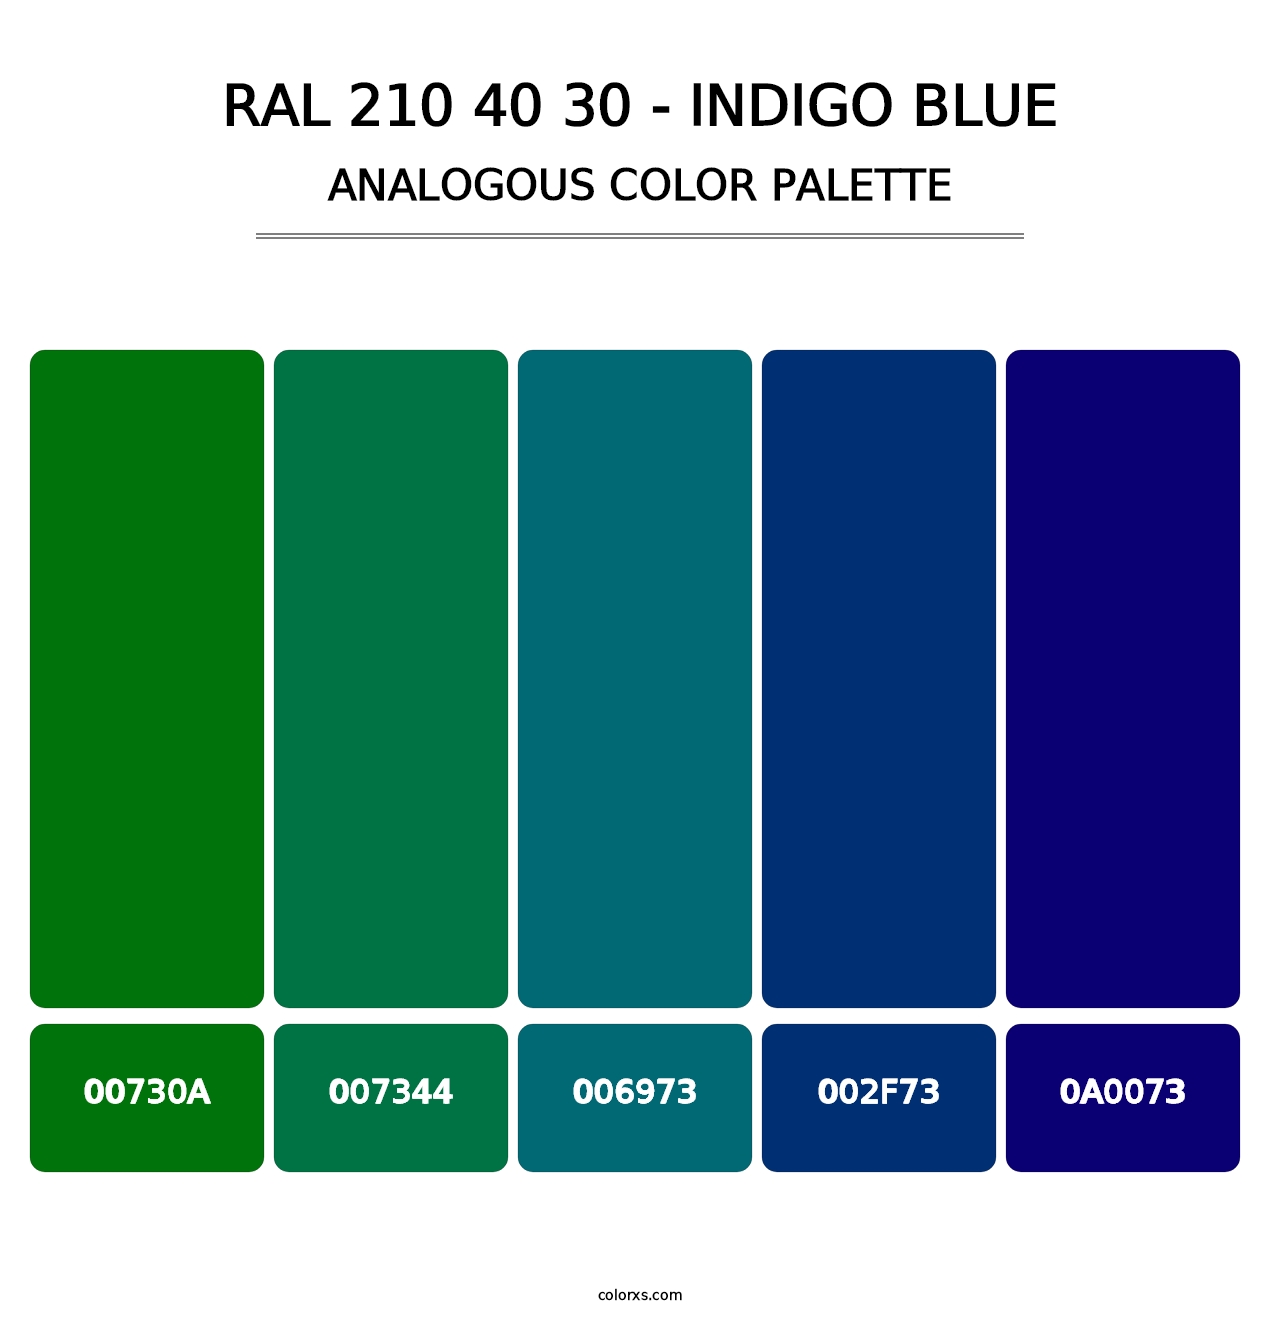 RAL 210 40 30 - Indigo Blue - Analogous Color Palette